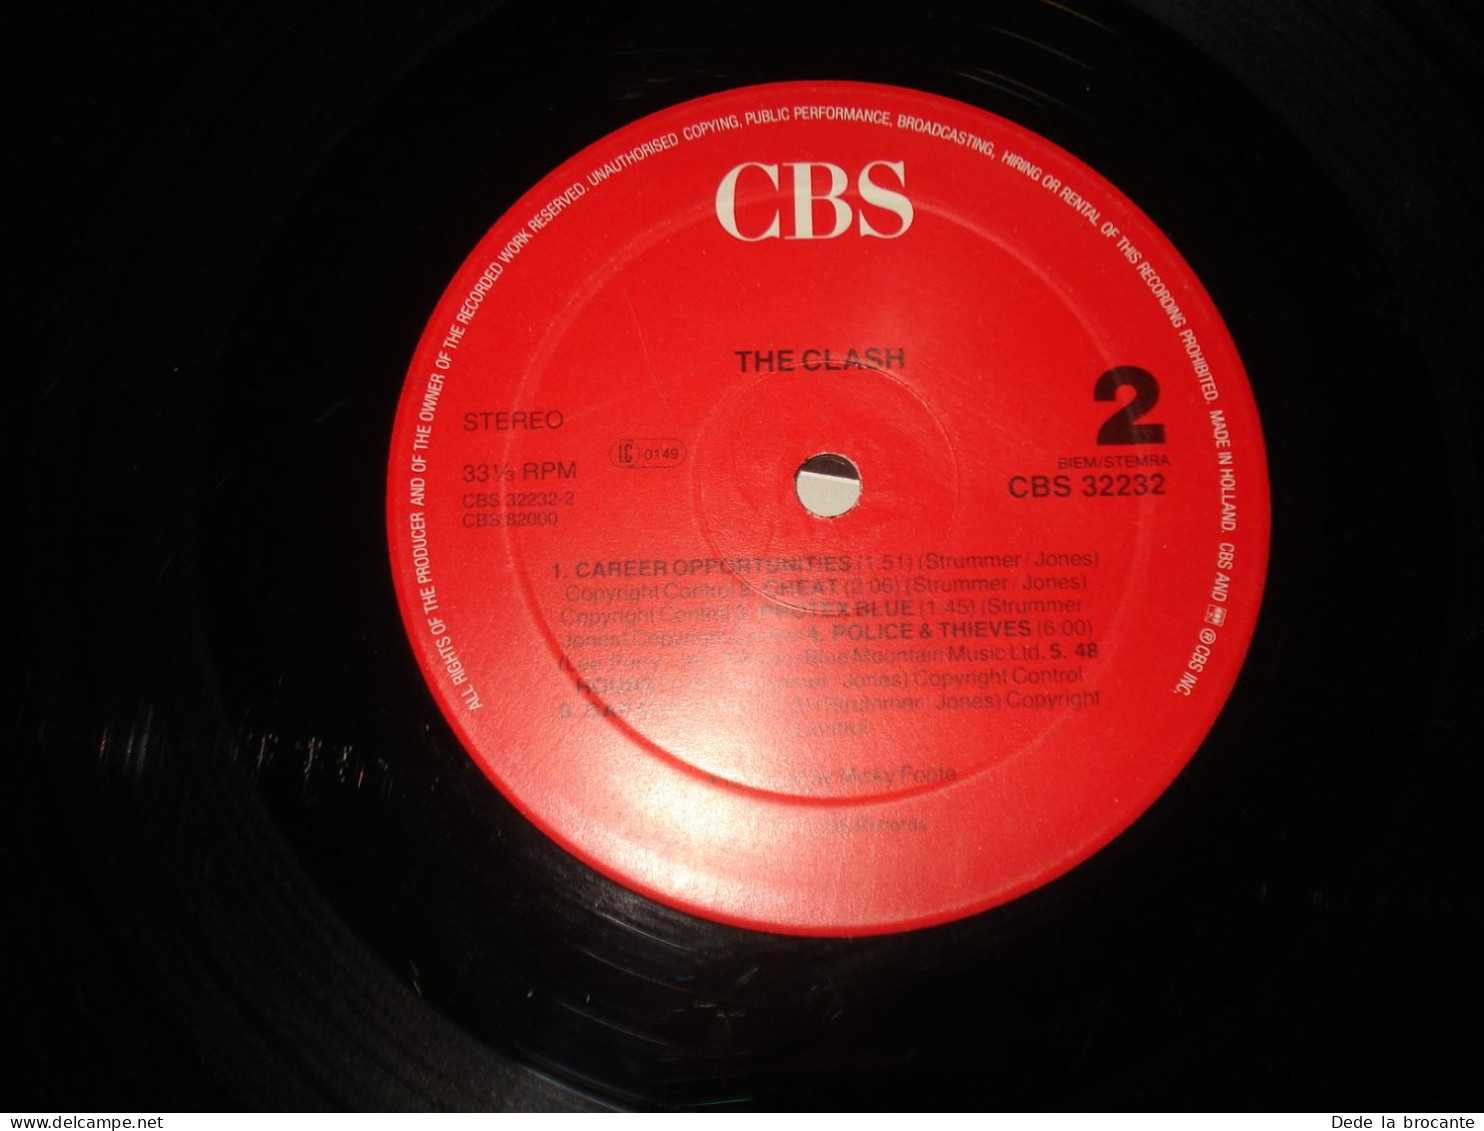 B12 / The Clash – CBS – CBS 32232 - Holland Europe 1982  VG+/M - Punk